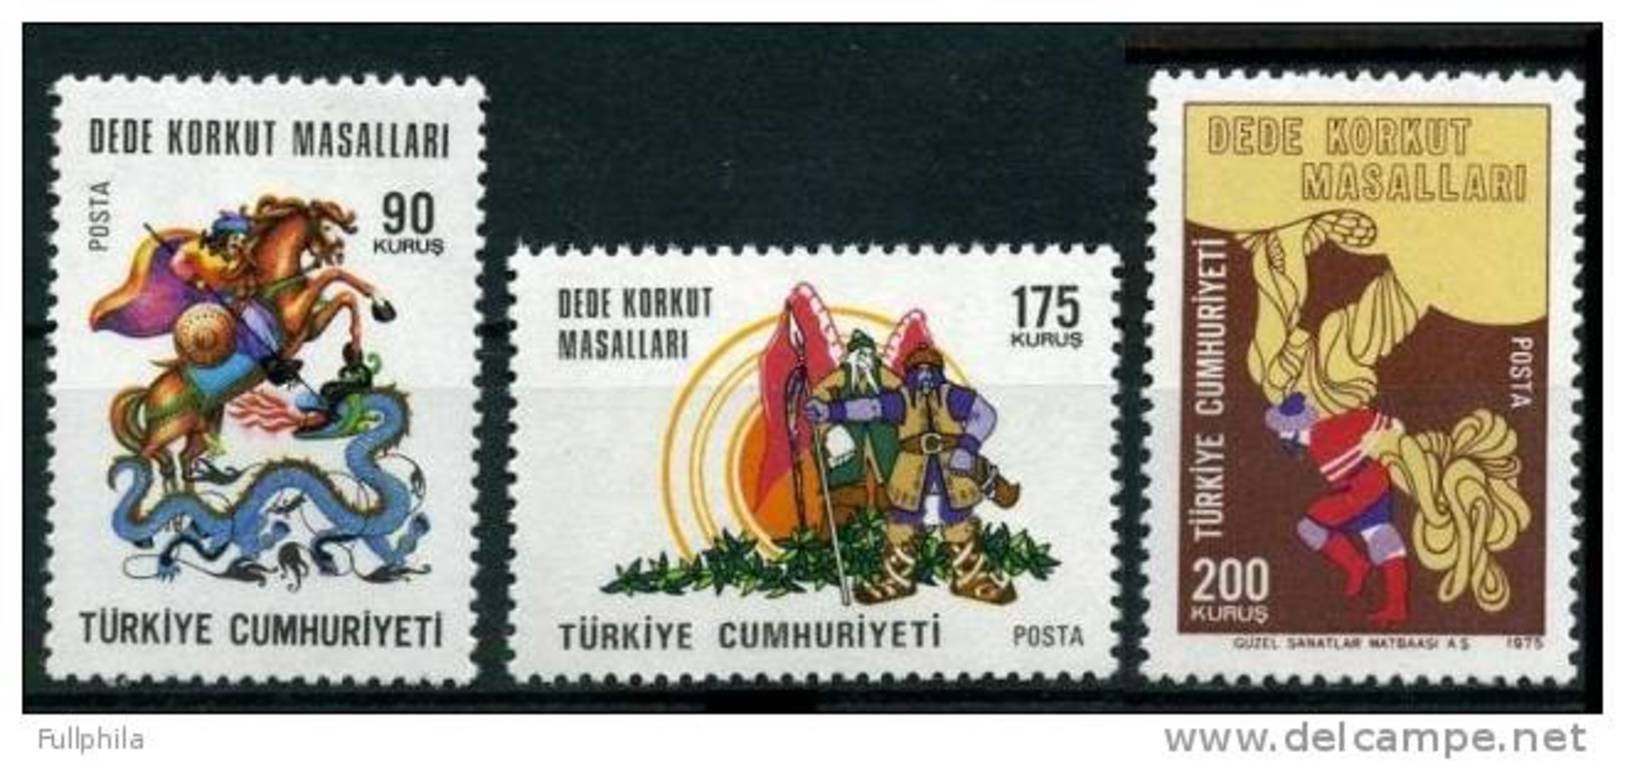 1975 TURKEY TALES OF DEDE KORKUT MNH ** - Unused Stamps